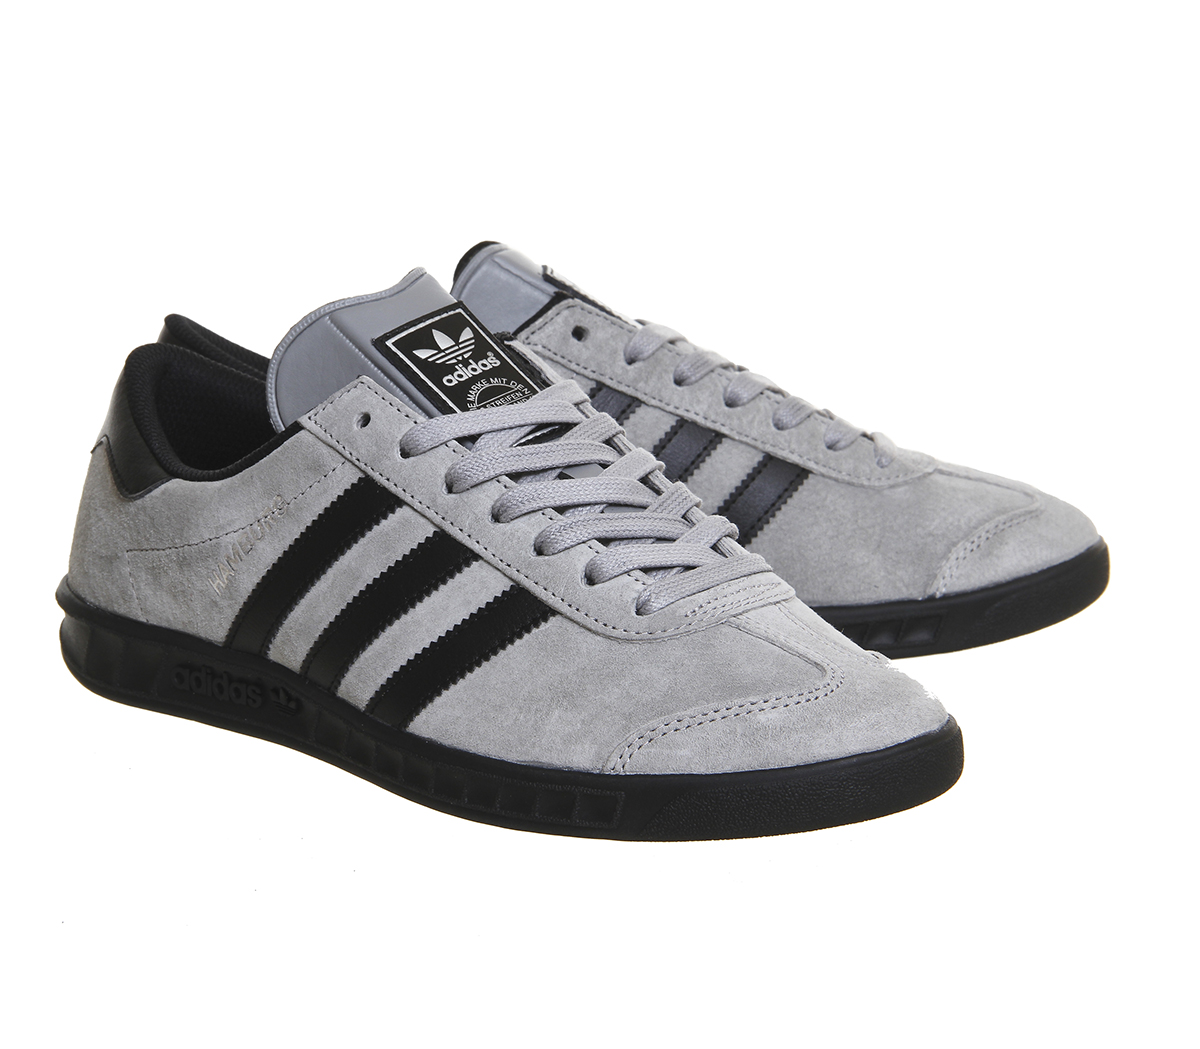 adidas Hamburg Solid Grey Black - His trainers